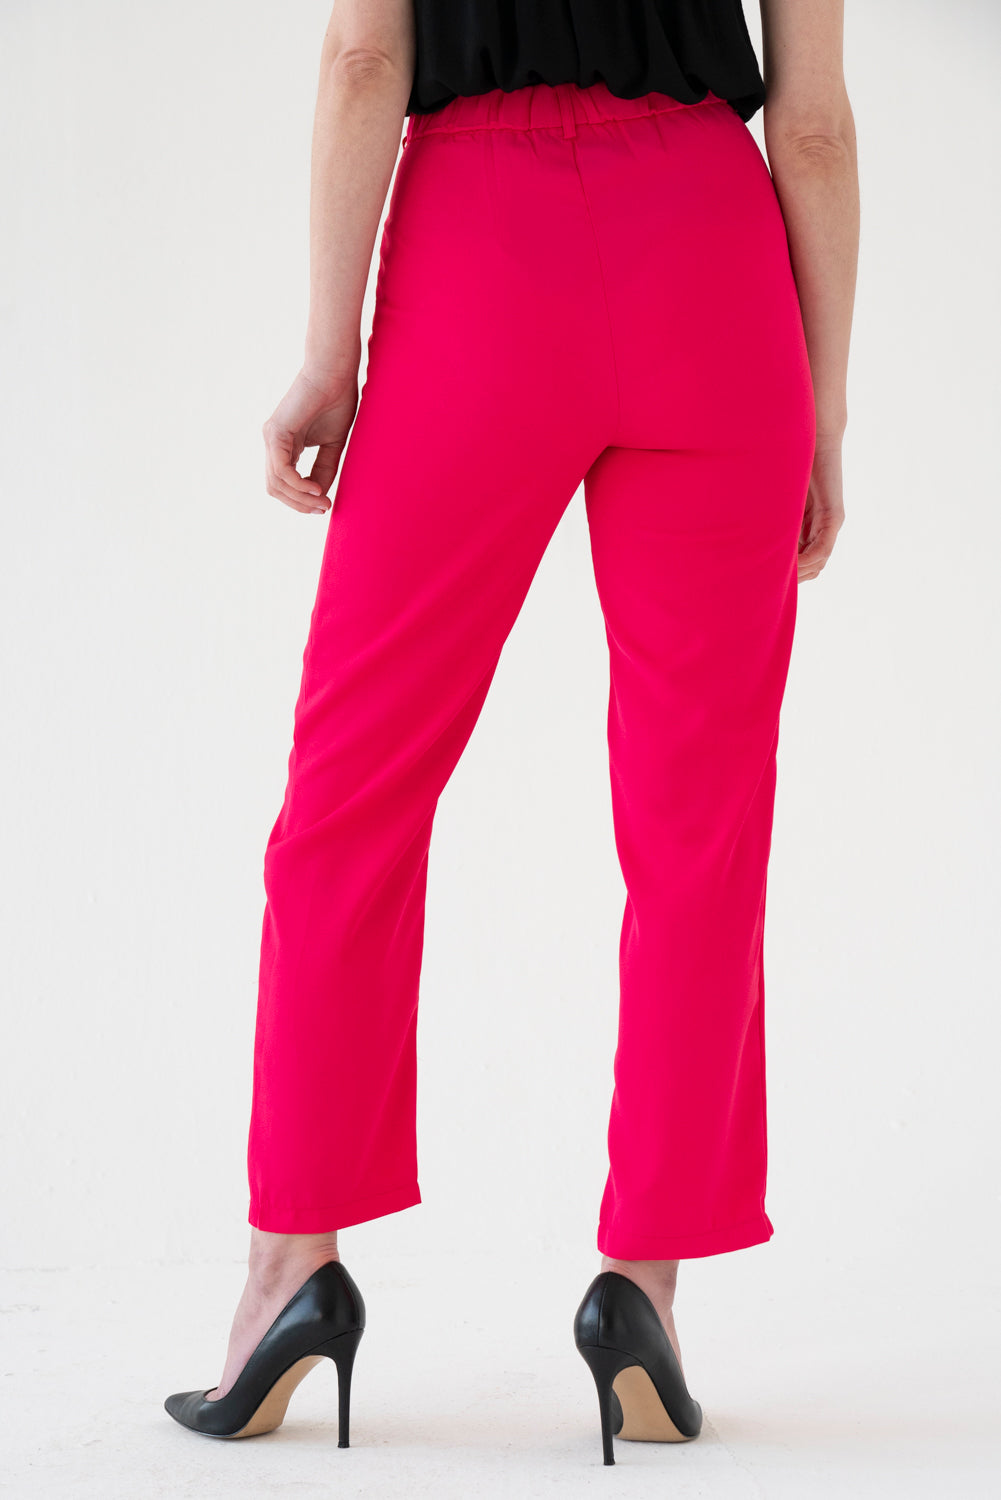 Hot Pink Pants